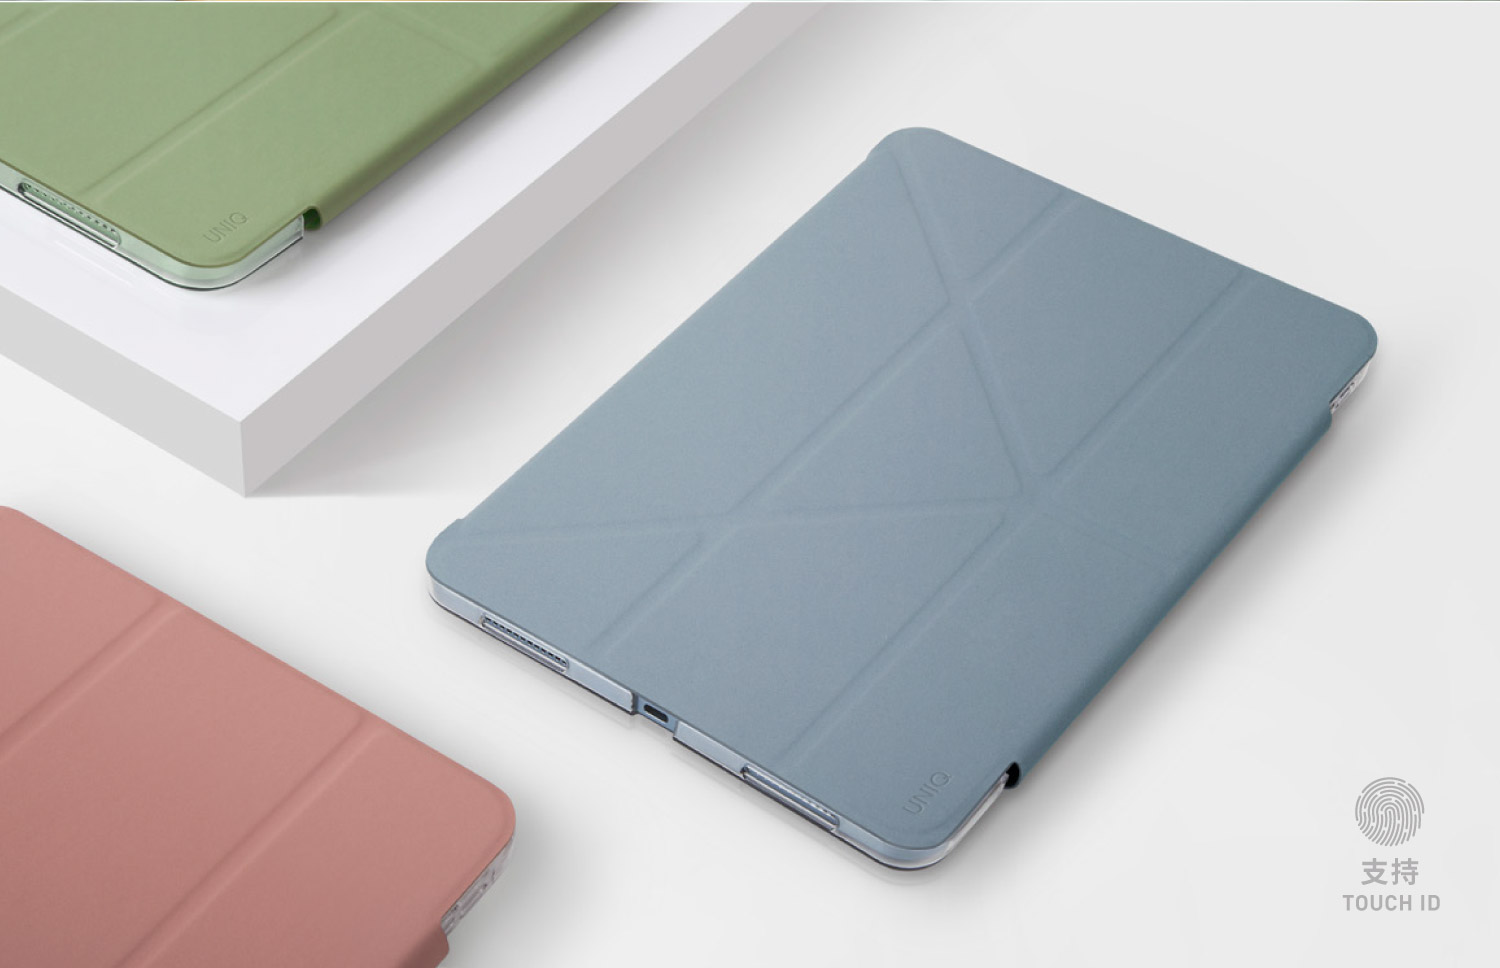 UNIQ Camden 2020 iPad 8 (10.2 吋) 支架式平板保護套, 灰